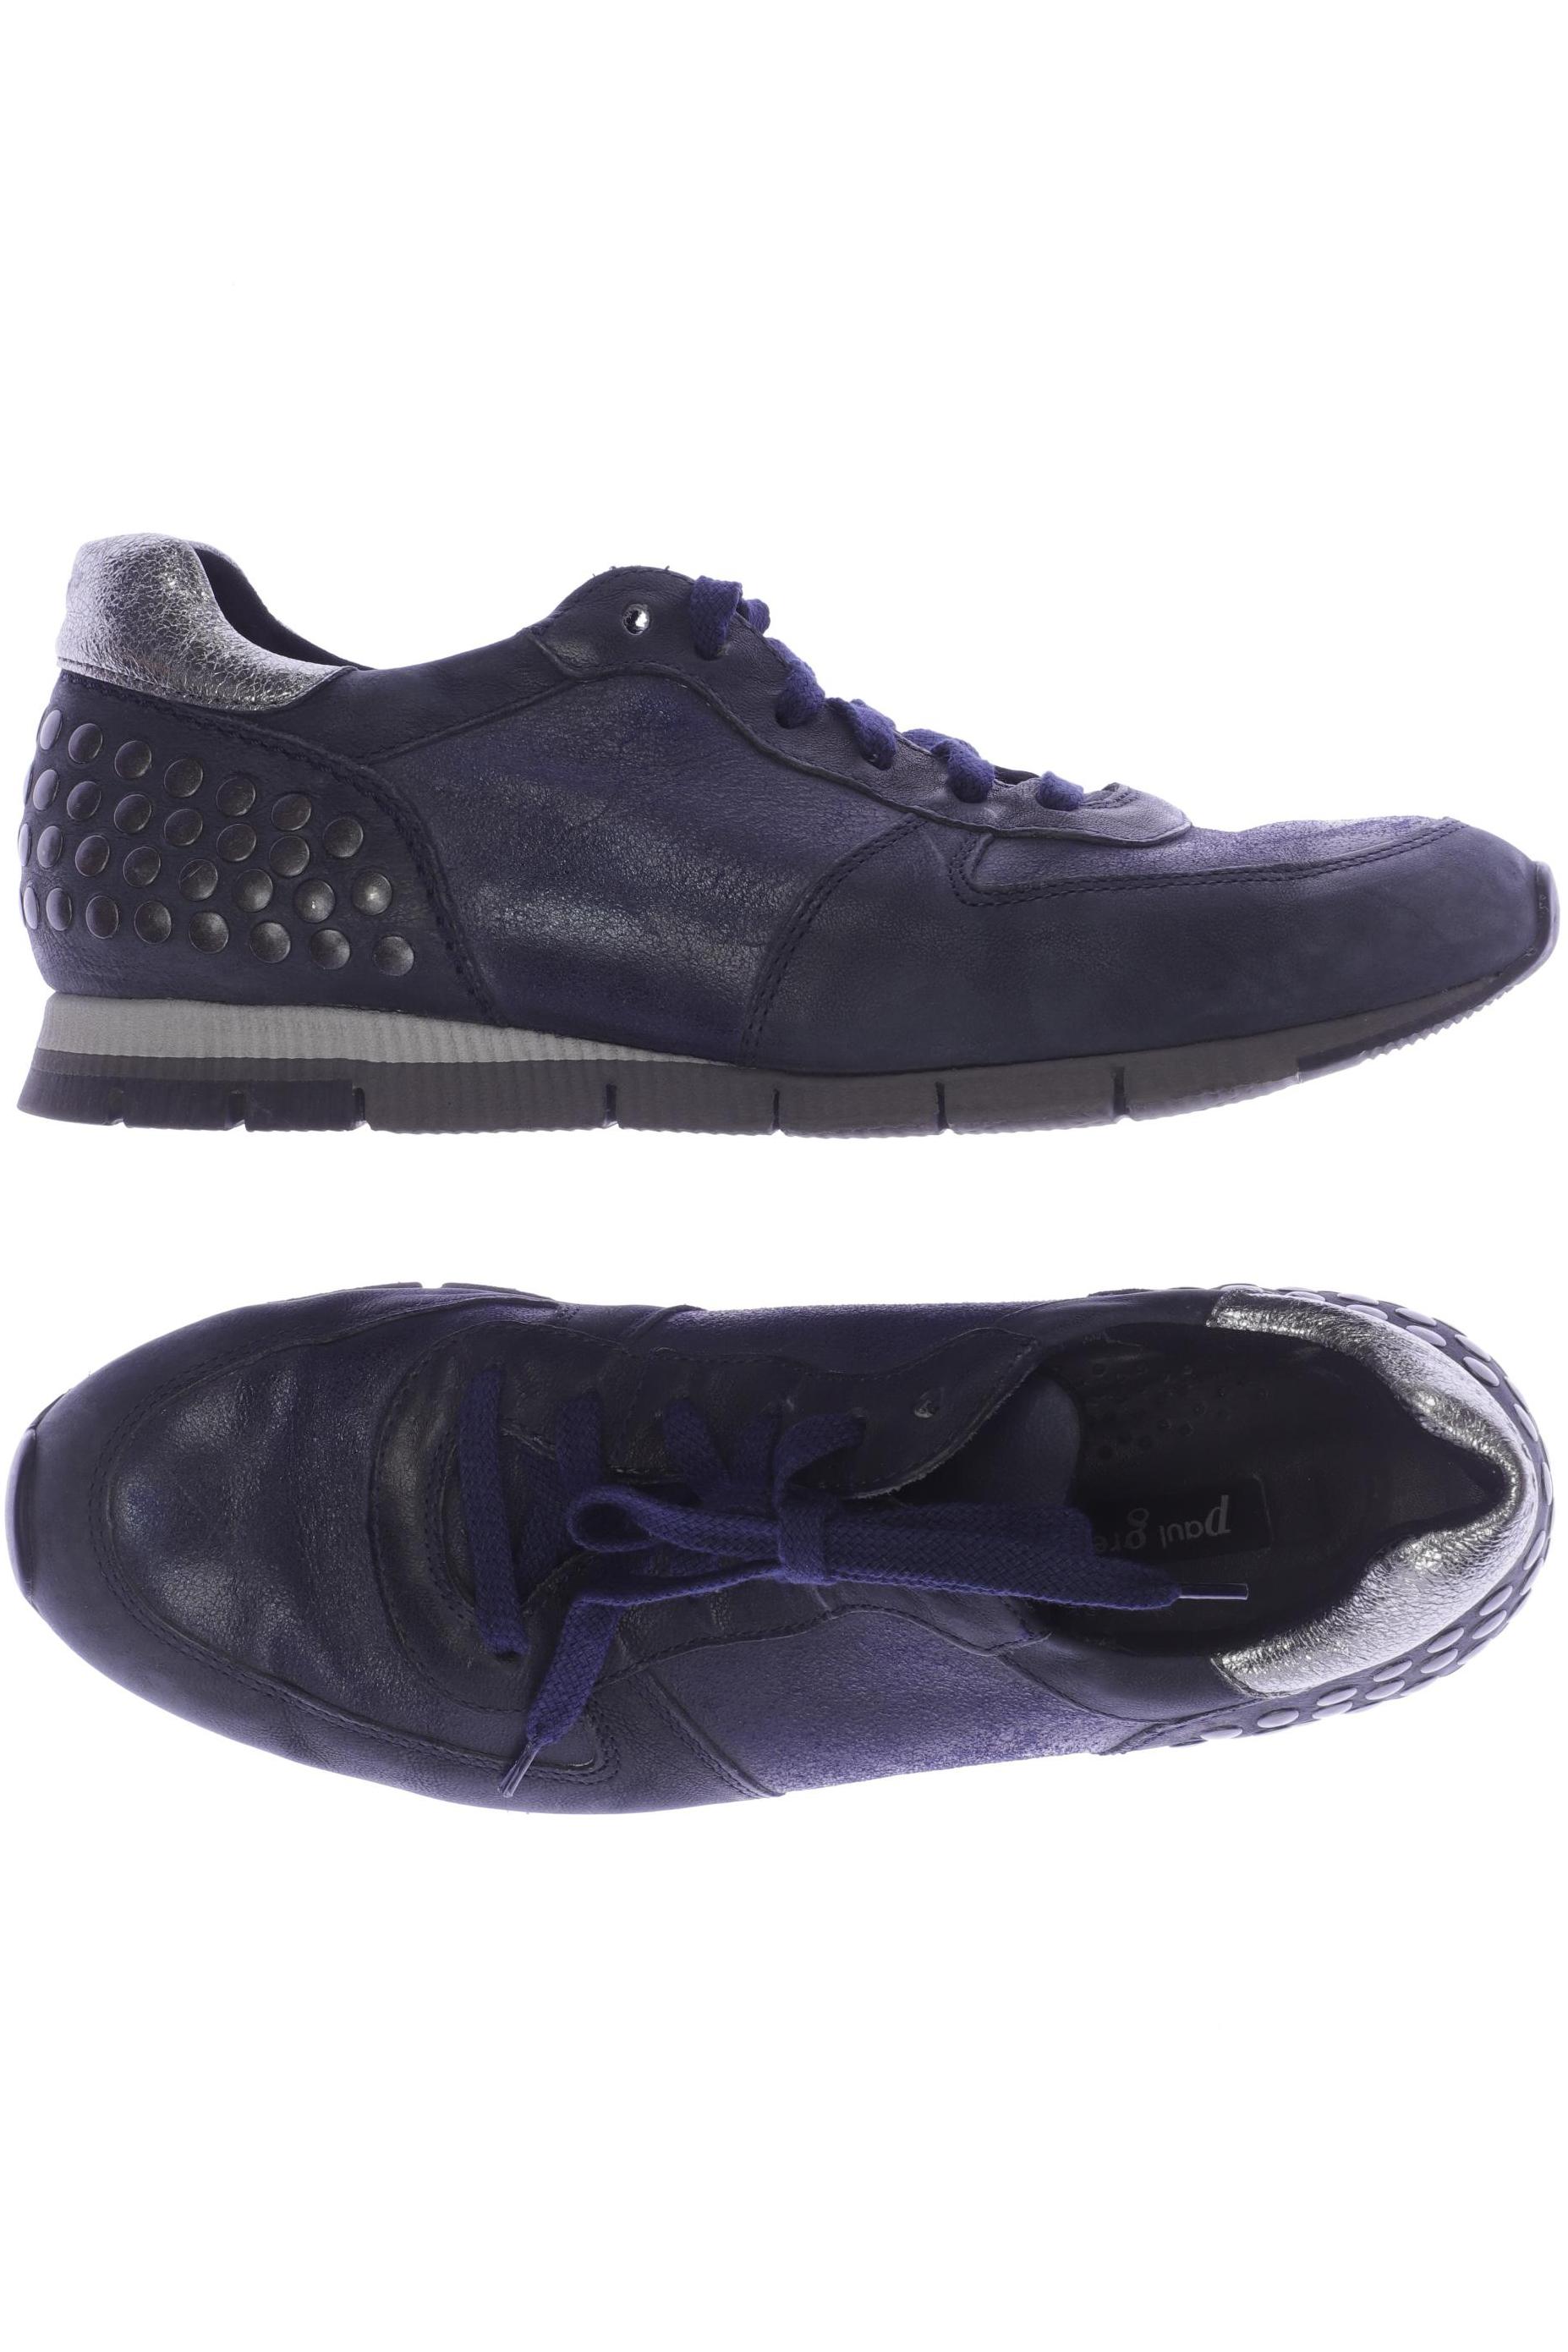 Paul Green Damen Sneakers, marineblau, Gr. 37 von Paul Green